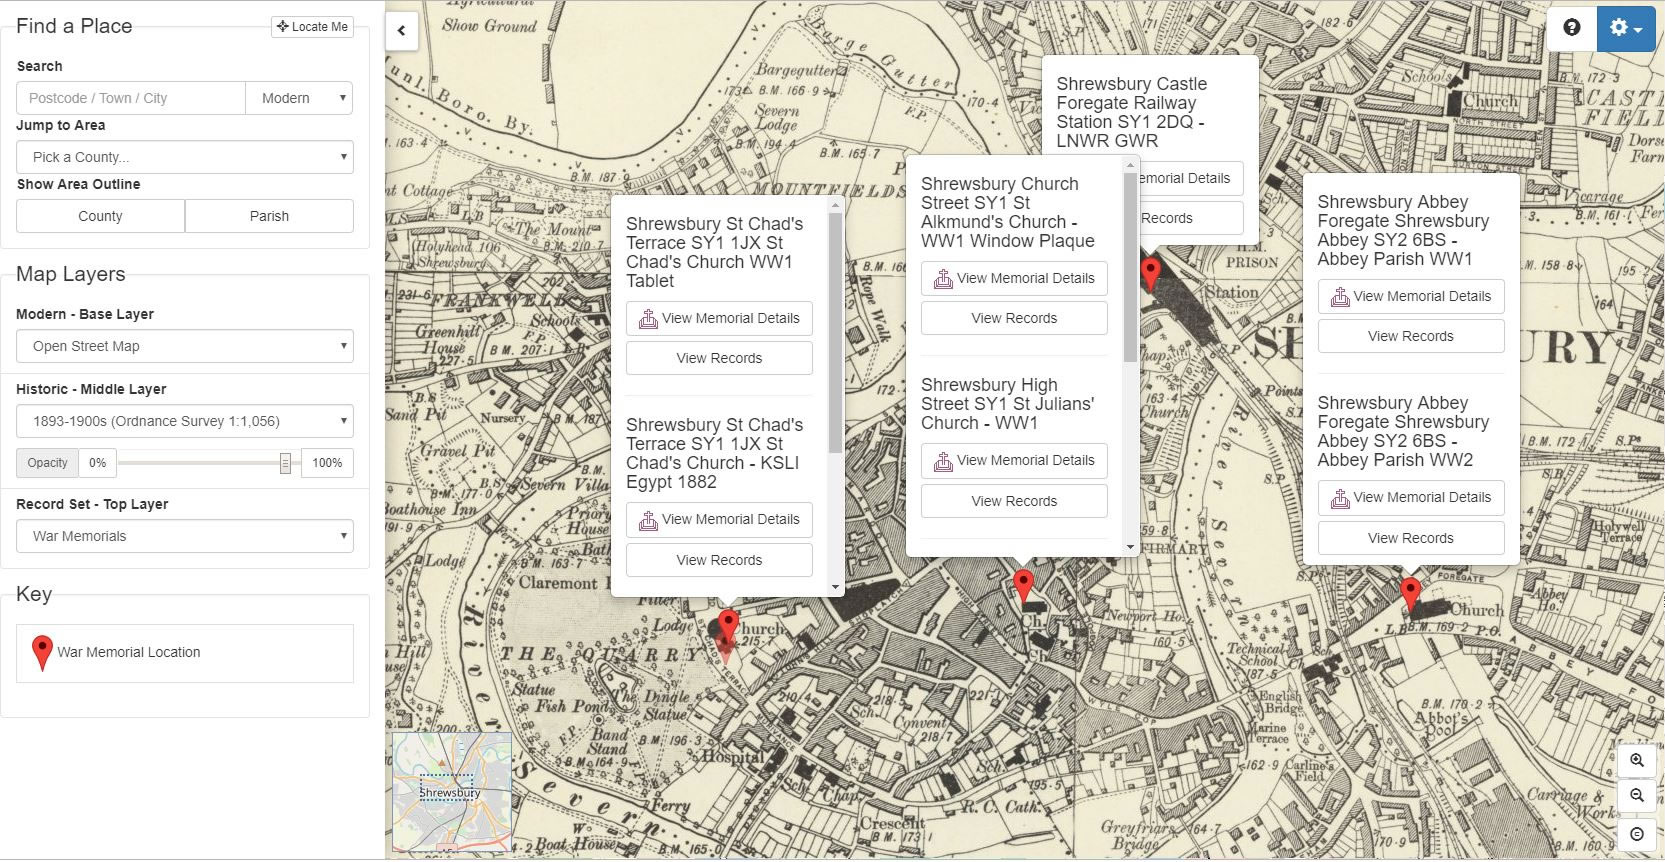 Map Explorer™ showing the location of War Memorials in Shrewsbury, Shropshire